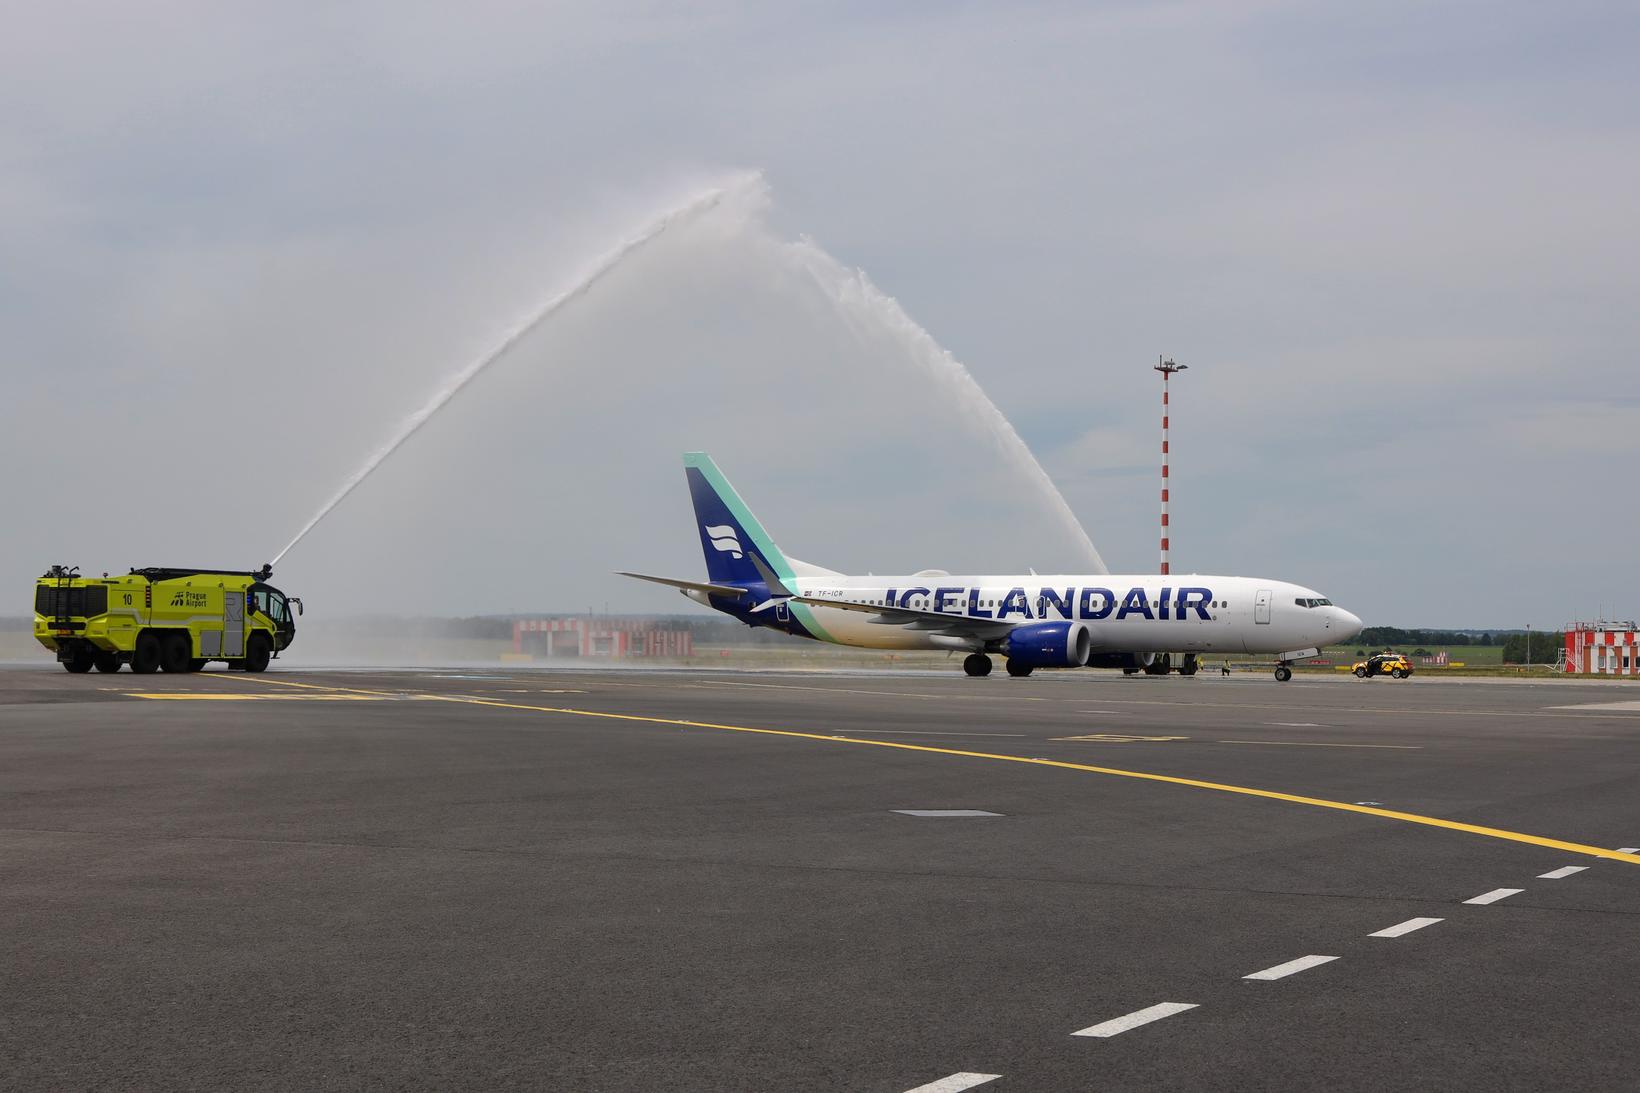 Icelandair’s first flight to Prague